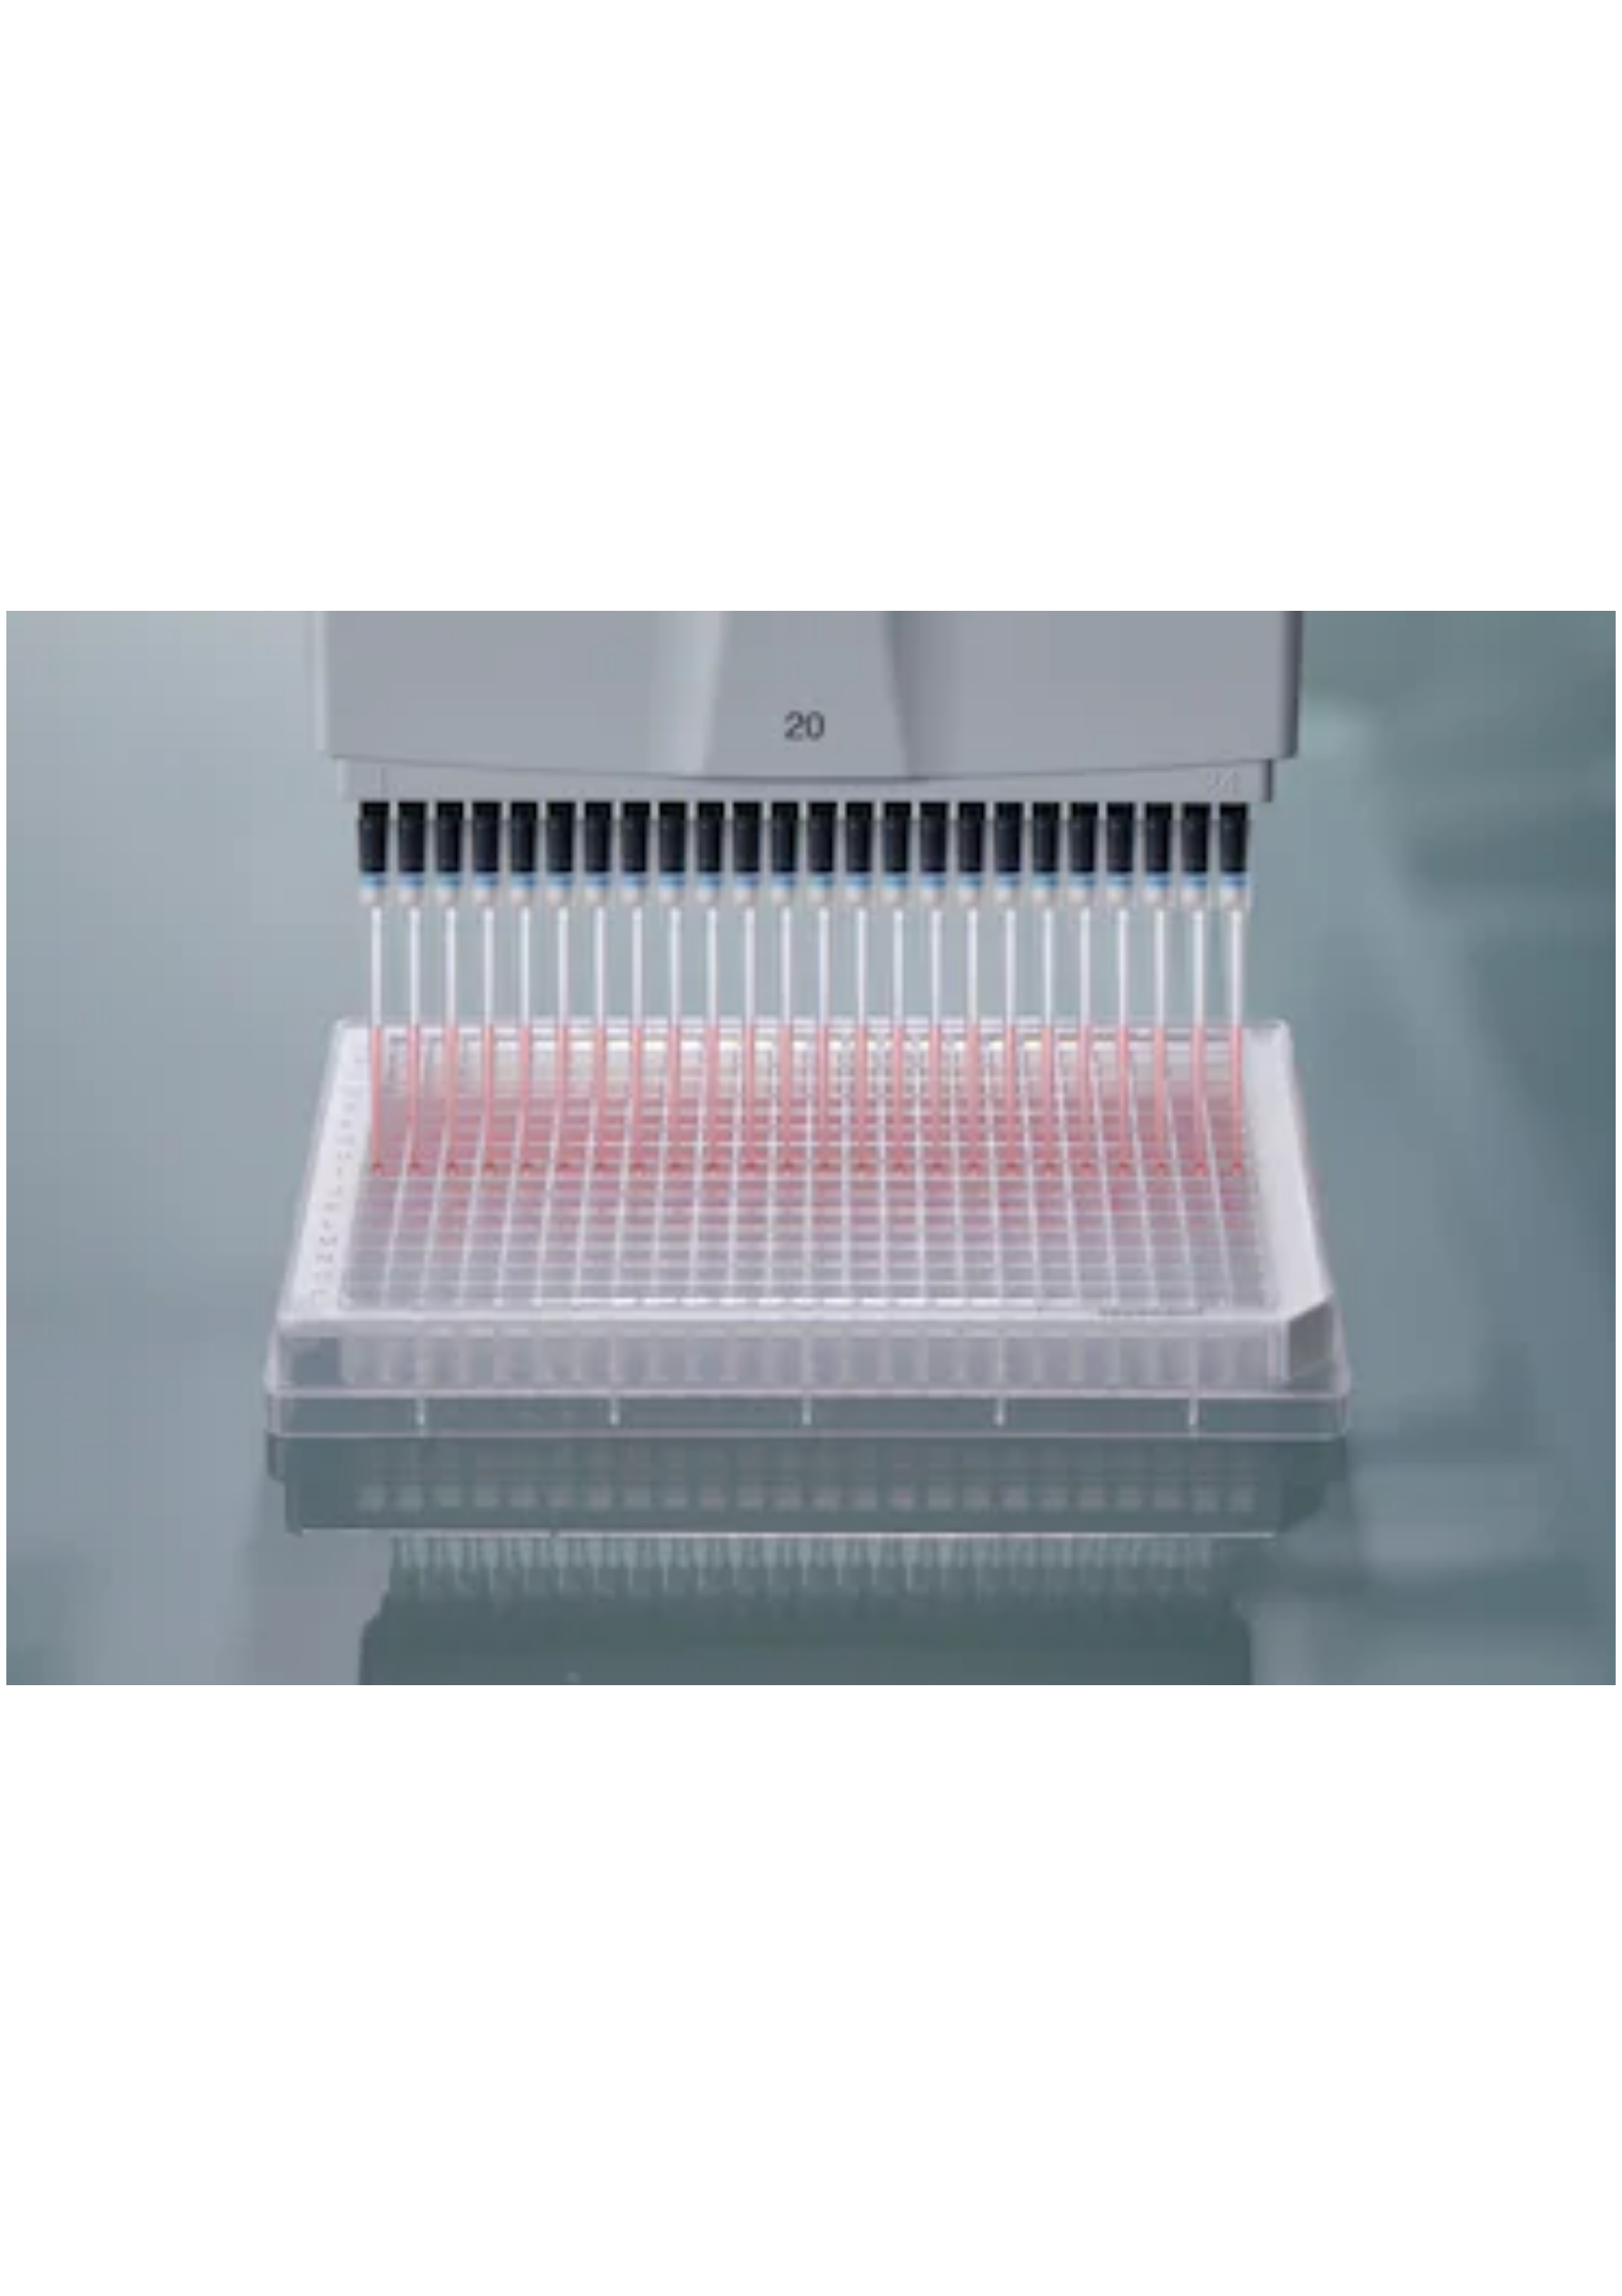 epTIPS Reloads 384 预装板, PCR洁净级, 0.1-20 µL, 42 mm, 珍珠白, 3,840个吸头( 10板x384个吸头)，0030076001，Eppendorf，艾本德